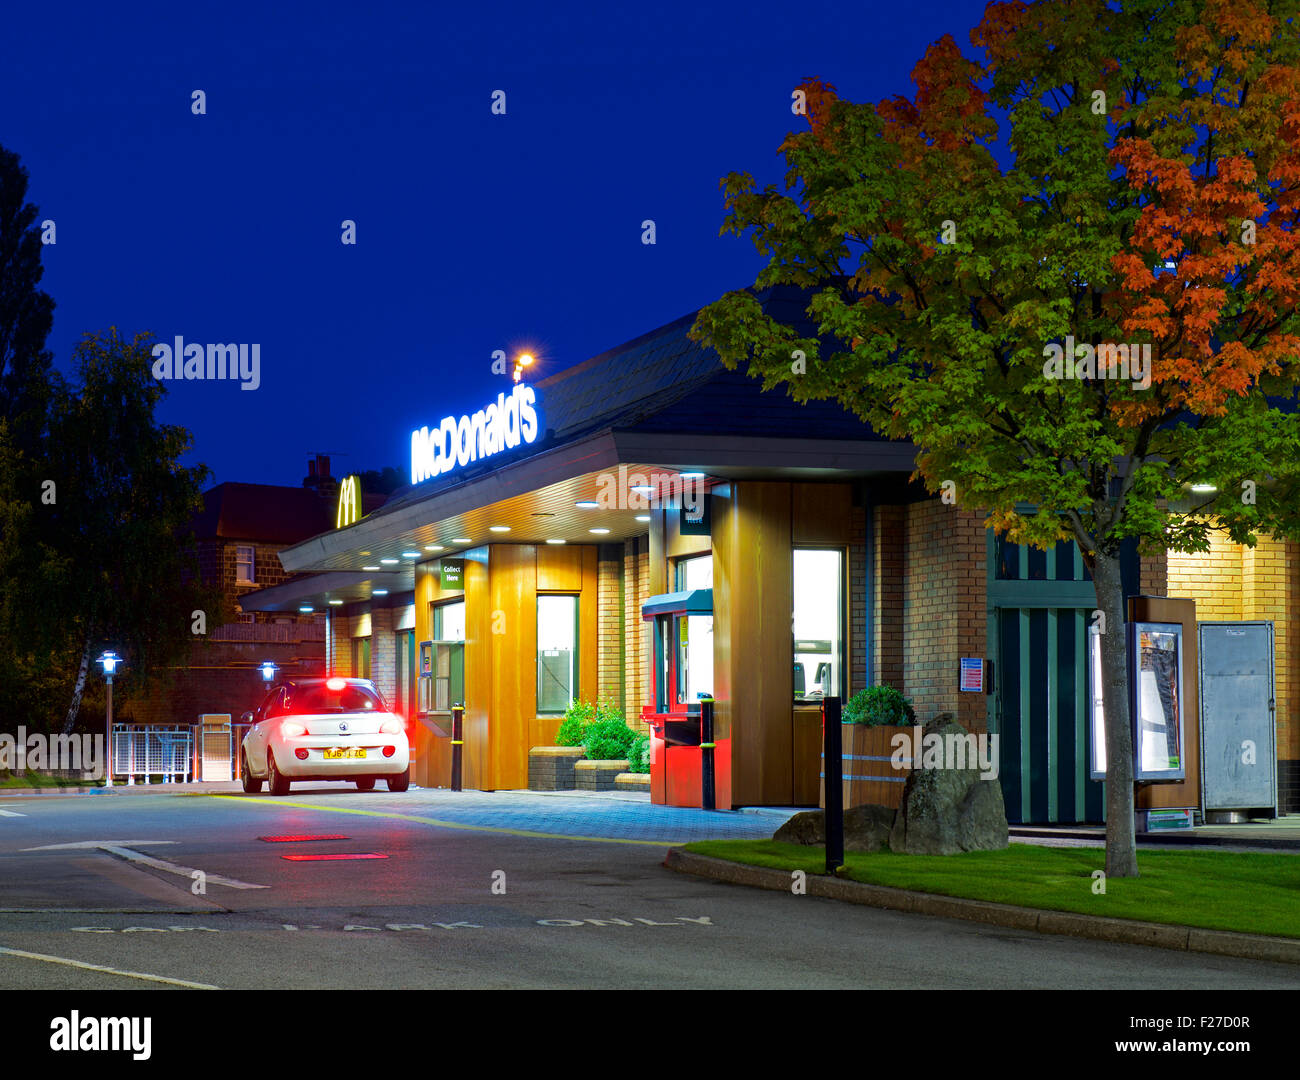 Car at McDonald's drive-in restaurant, at night, England UK Stock Photo